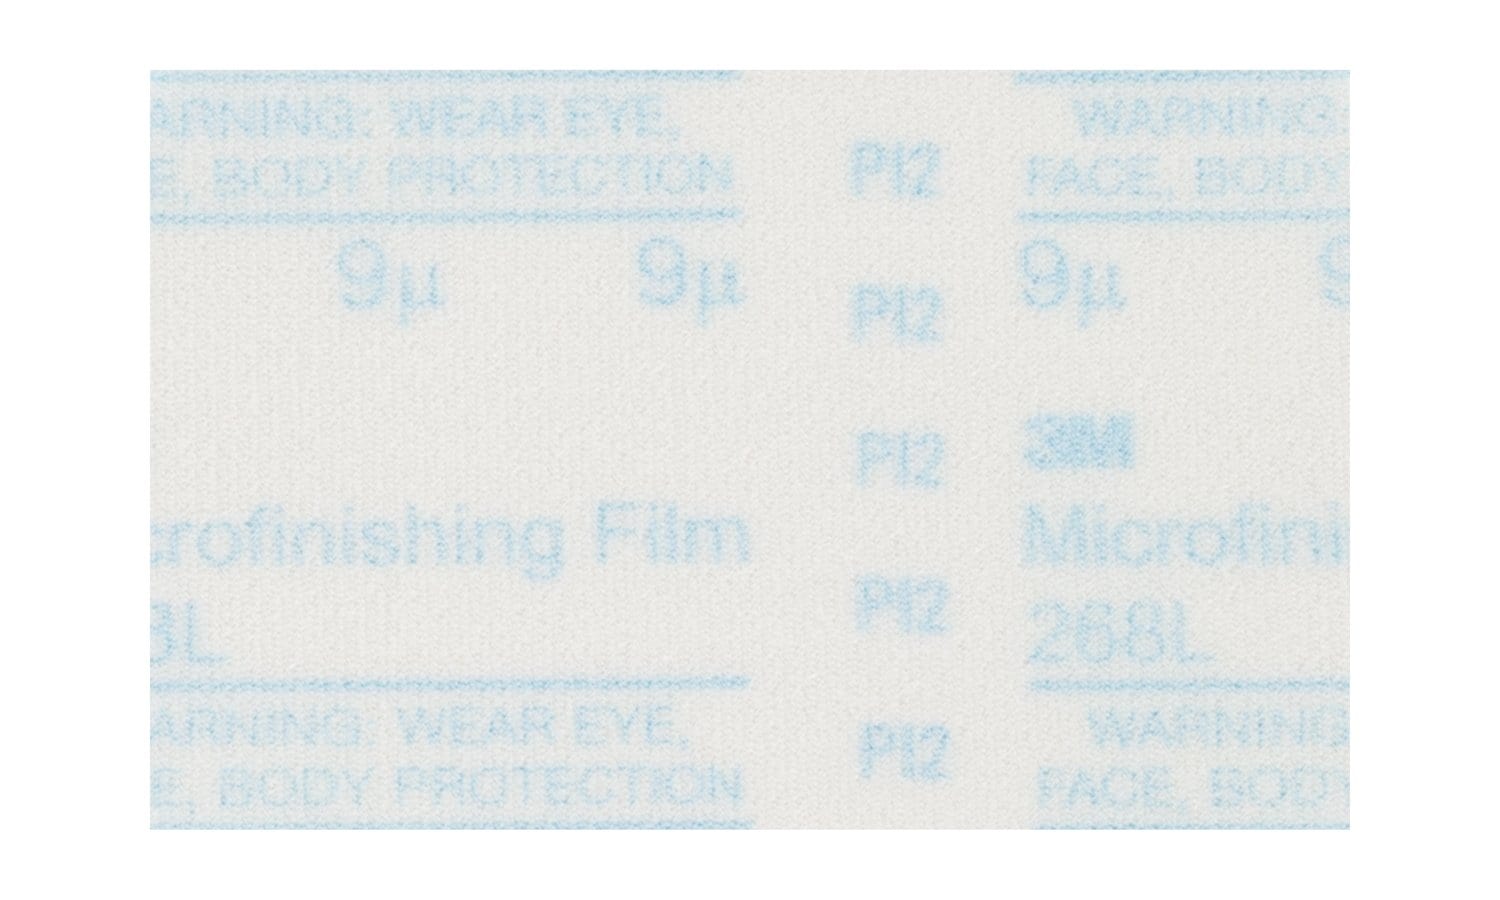 7100047218 - 3M Microfinishing PSA Film Sheet 268L, 40 Mic, Type D, Config